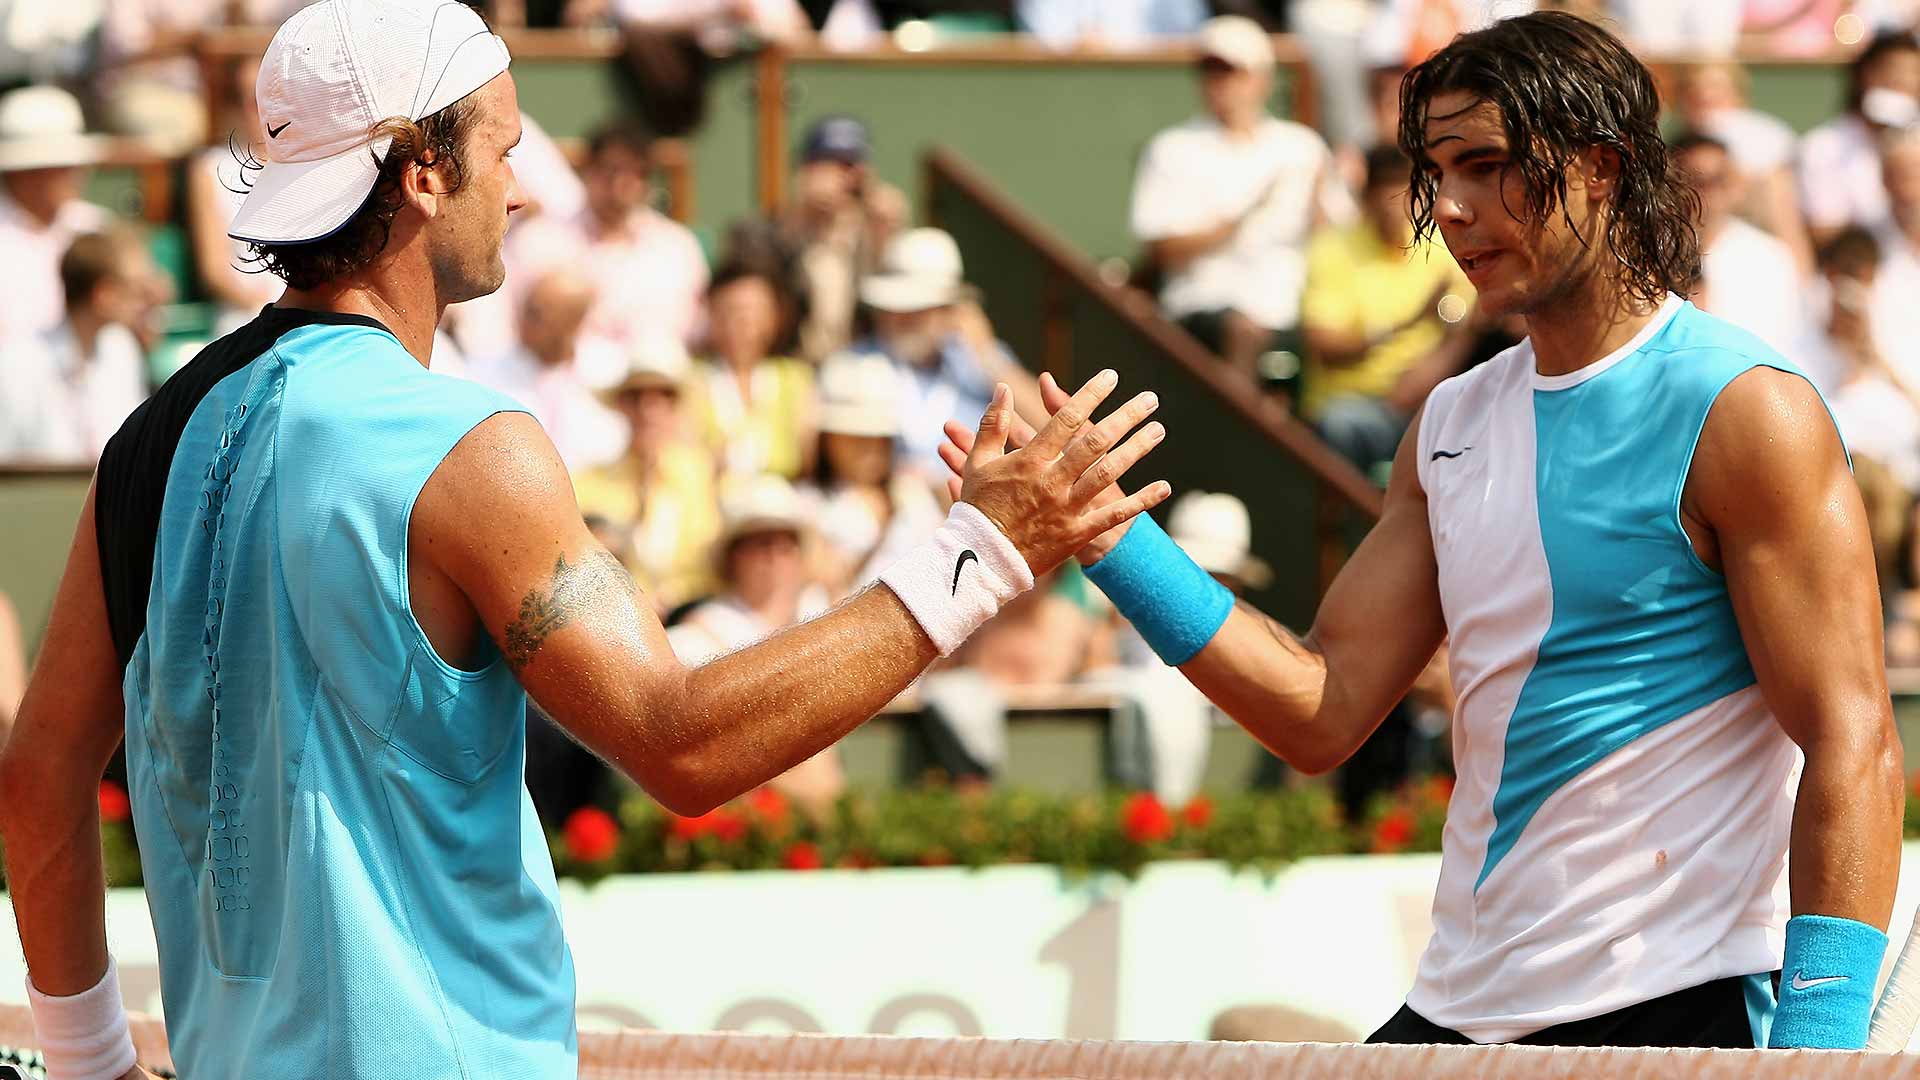 Carlos Moya gives Rafael Nadal a congratulatory handshake after Nadal's win in the 2007 Roland Garros Quarter-Finals